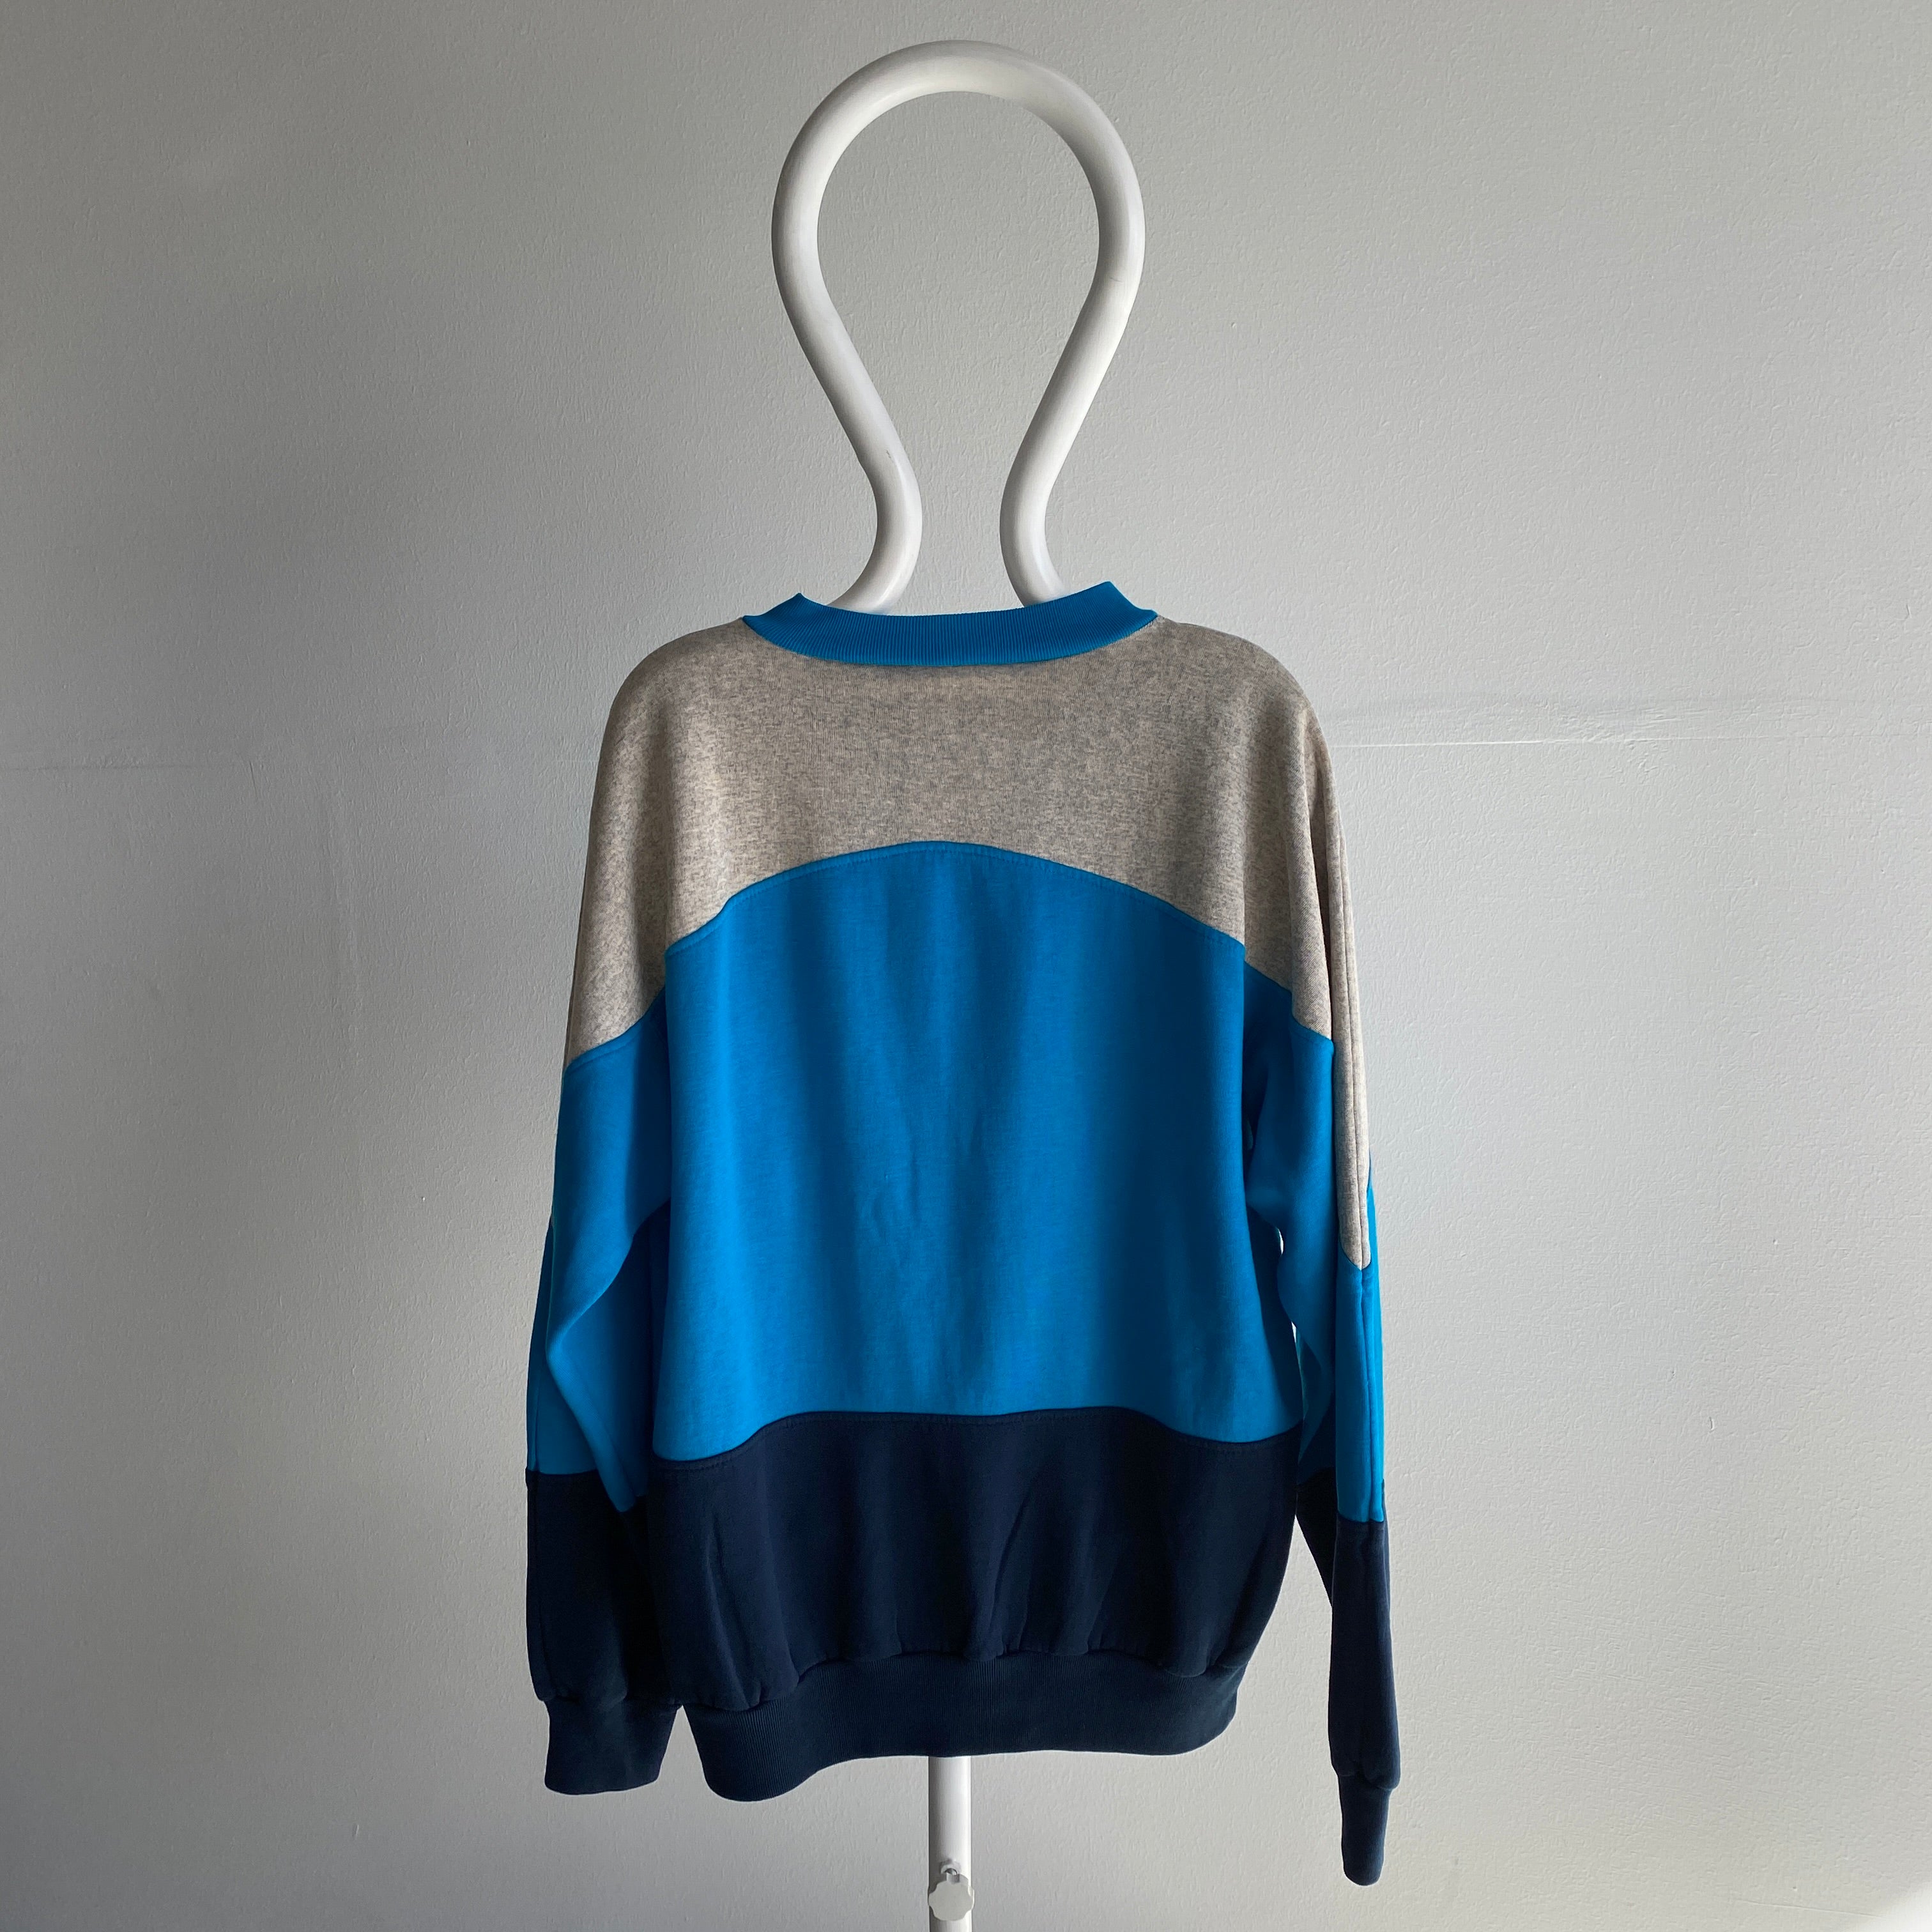 90s/00s Super Slouchy Color Block PONY Sweatshirt